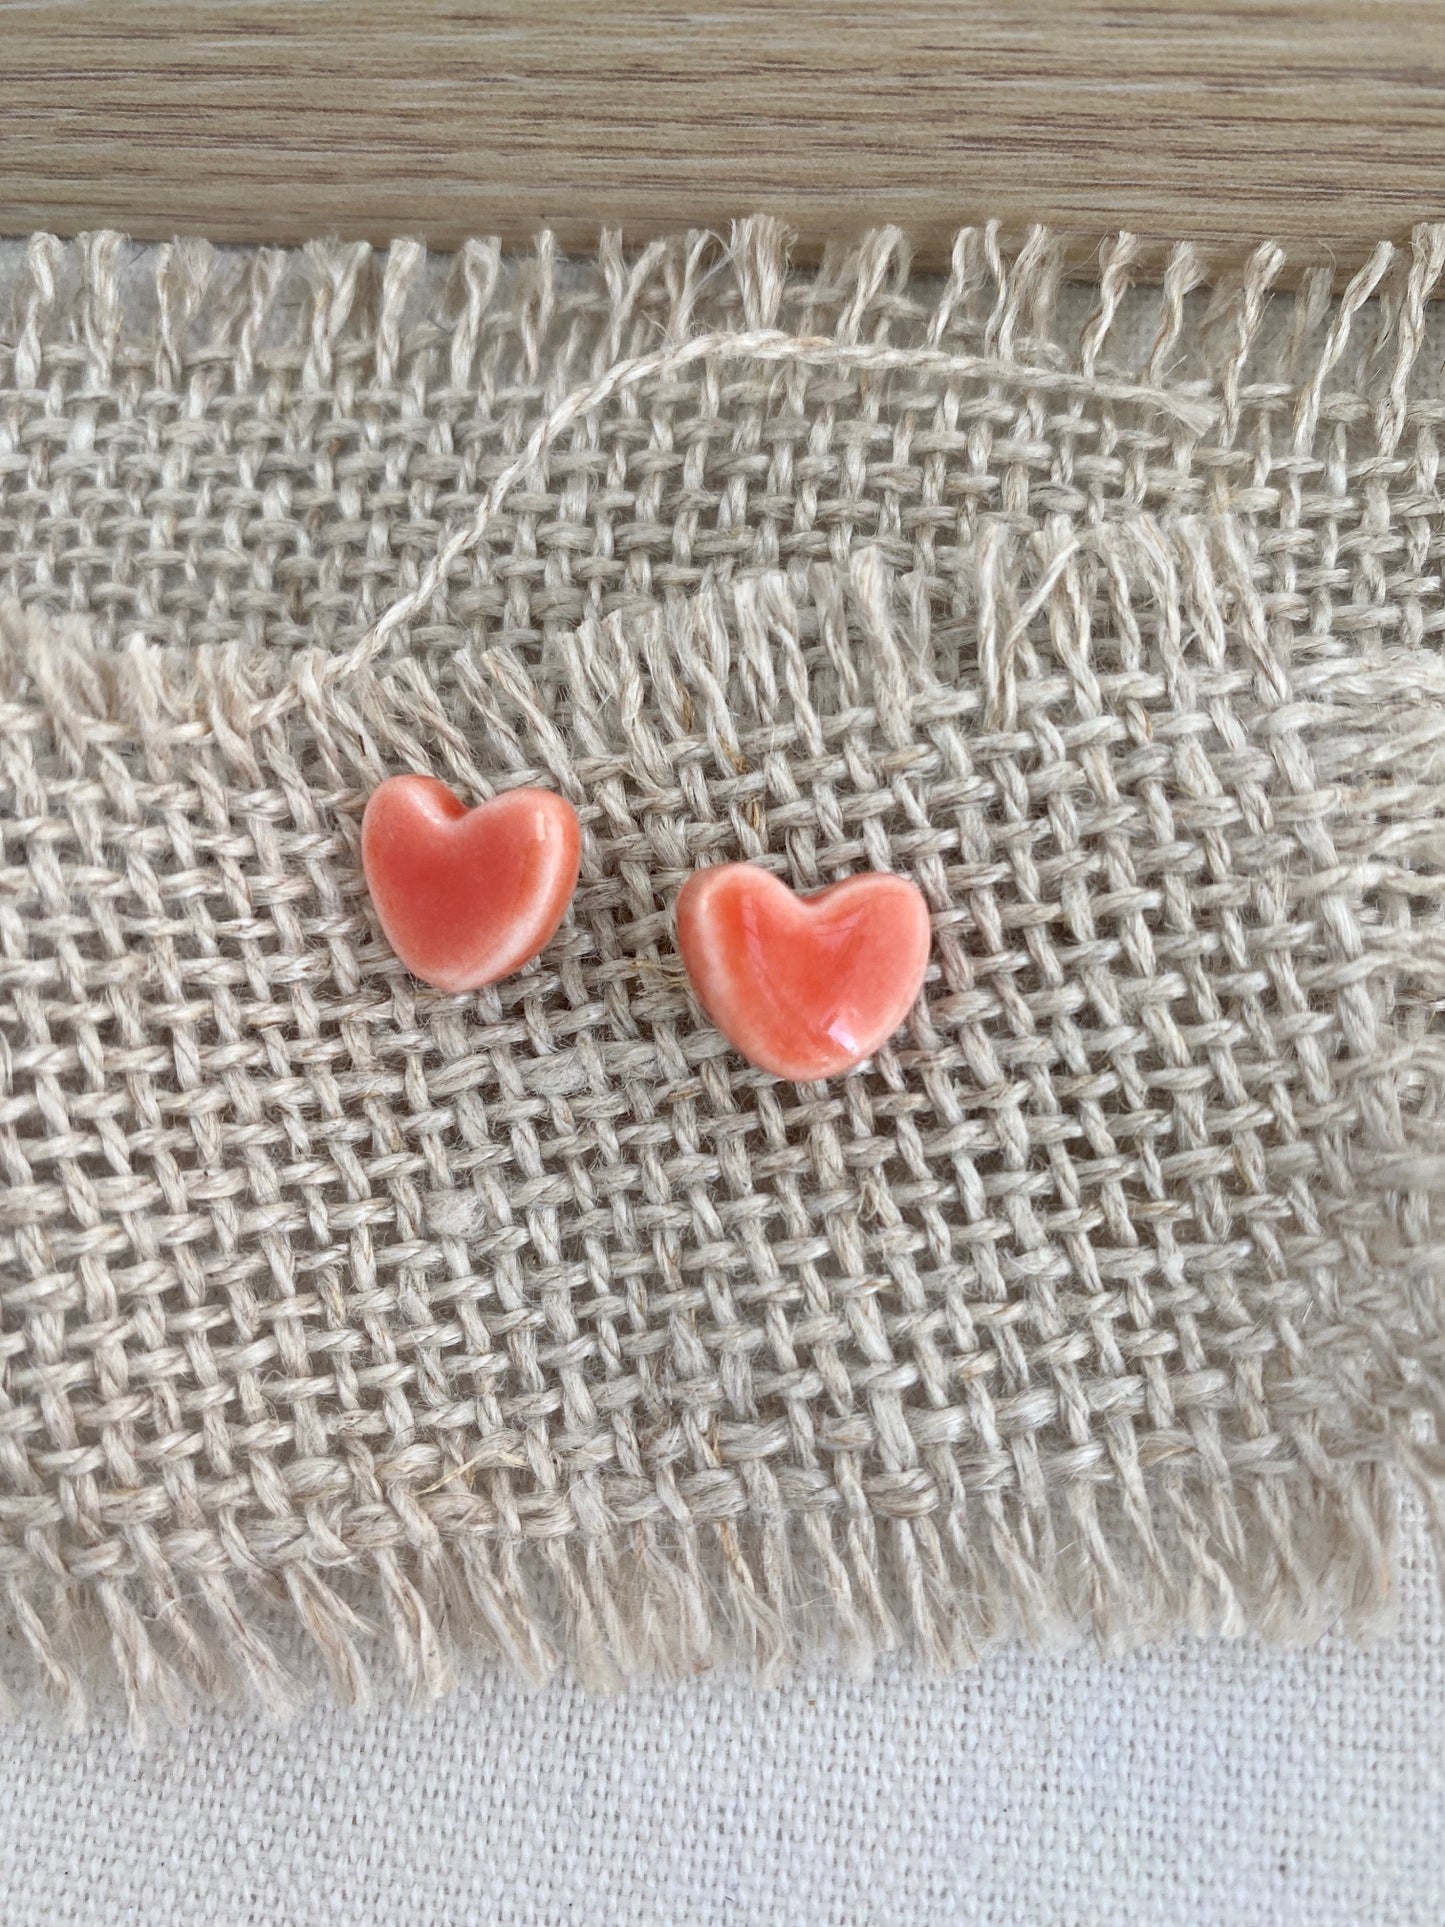 Heart shaped porcelain stud earrings